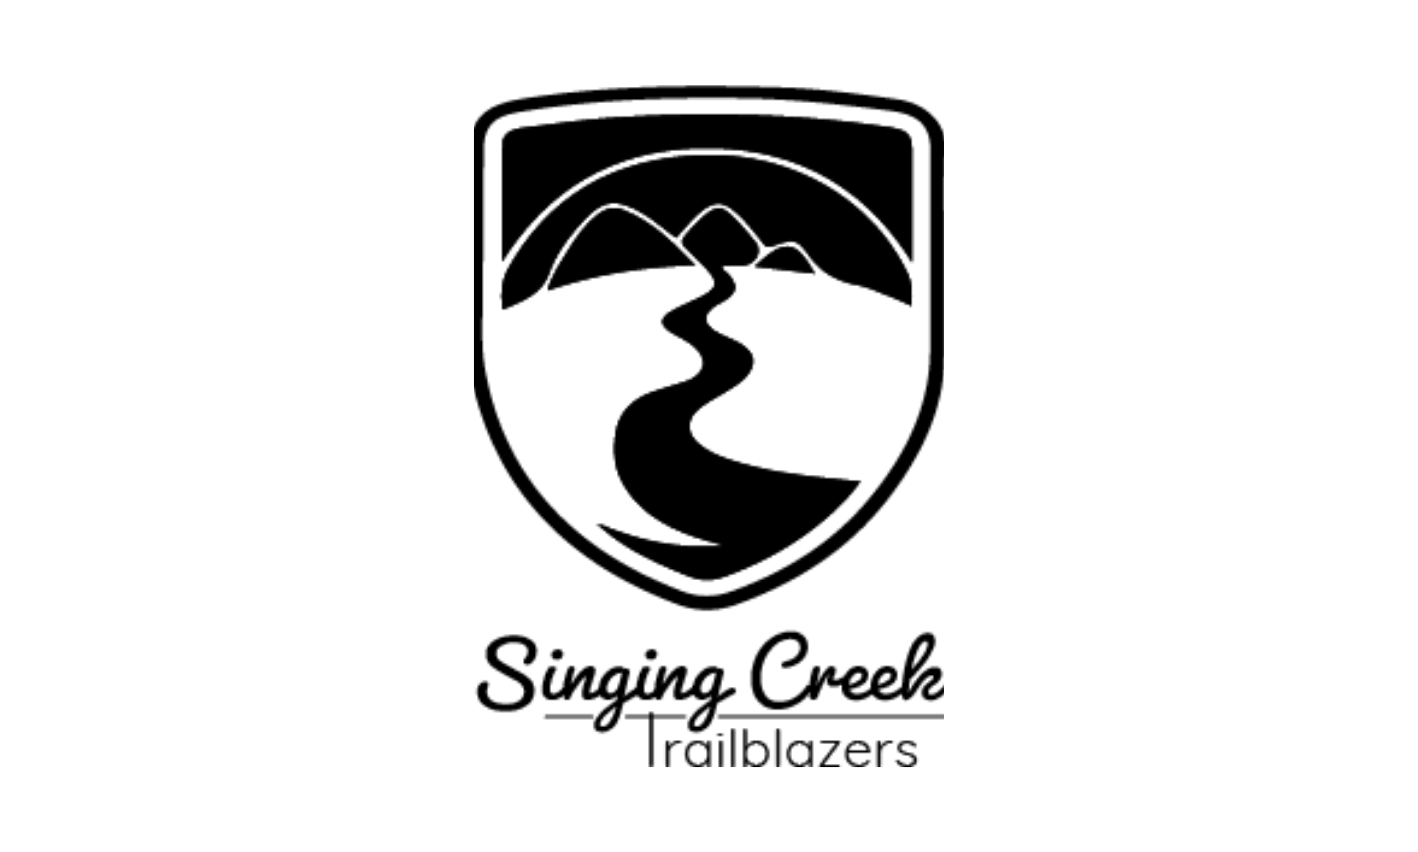 Singing Creek Trailblazers Logo Black